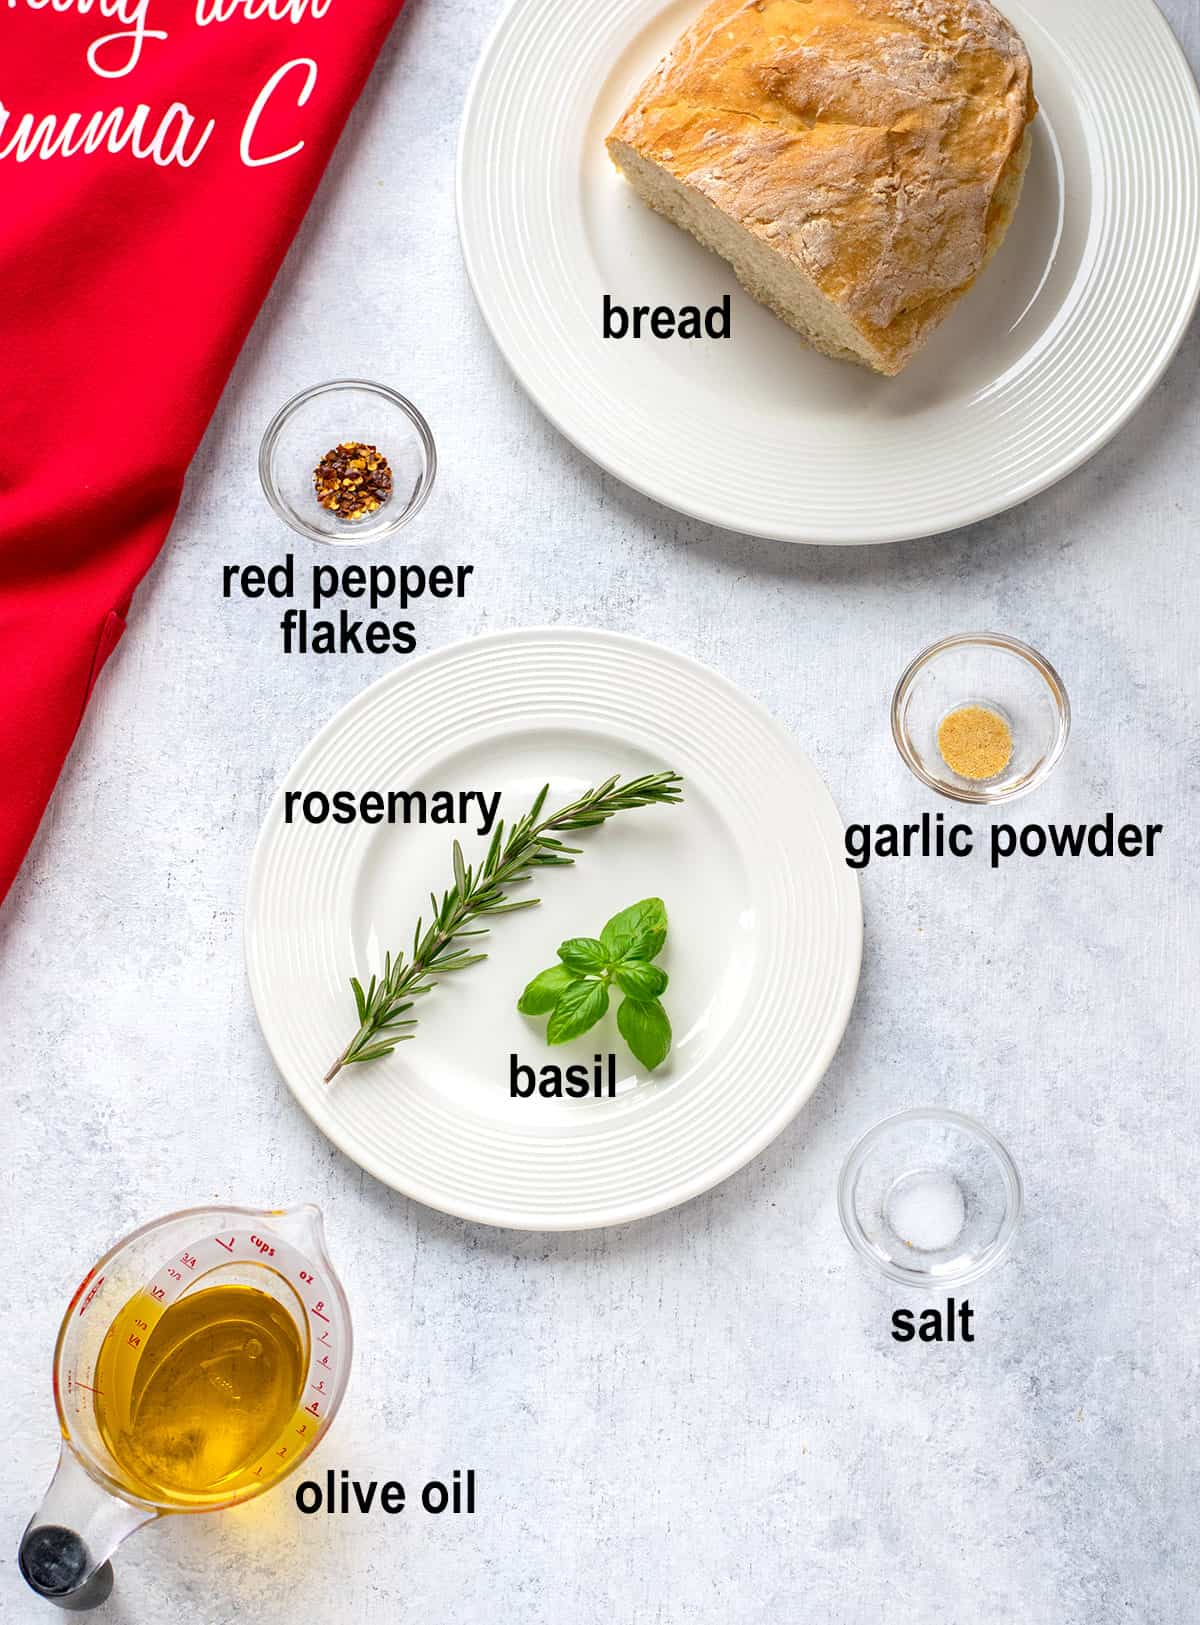 bread, red pepper flakes, rosemary, garlic powder, basil, olive oil, salt.